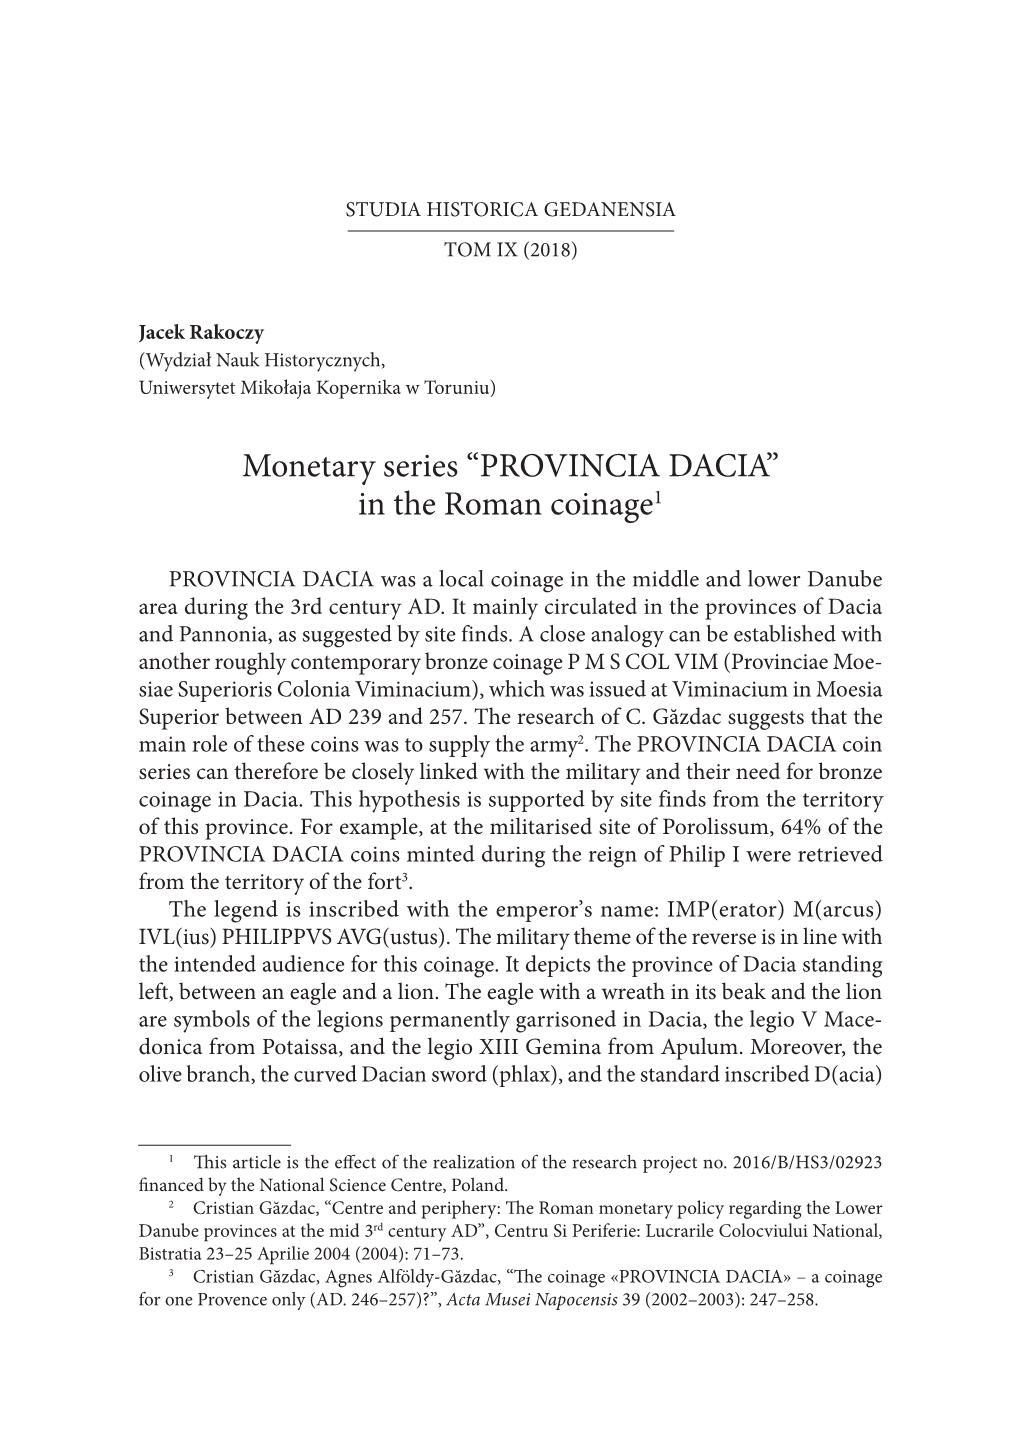 Monetary Series “PROVINCIA DACIA” in the Roman Coinage1